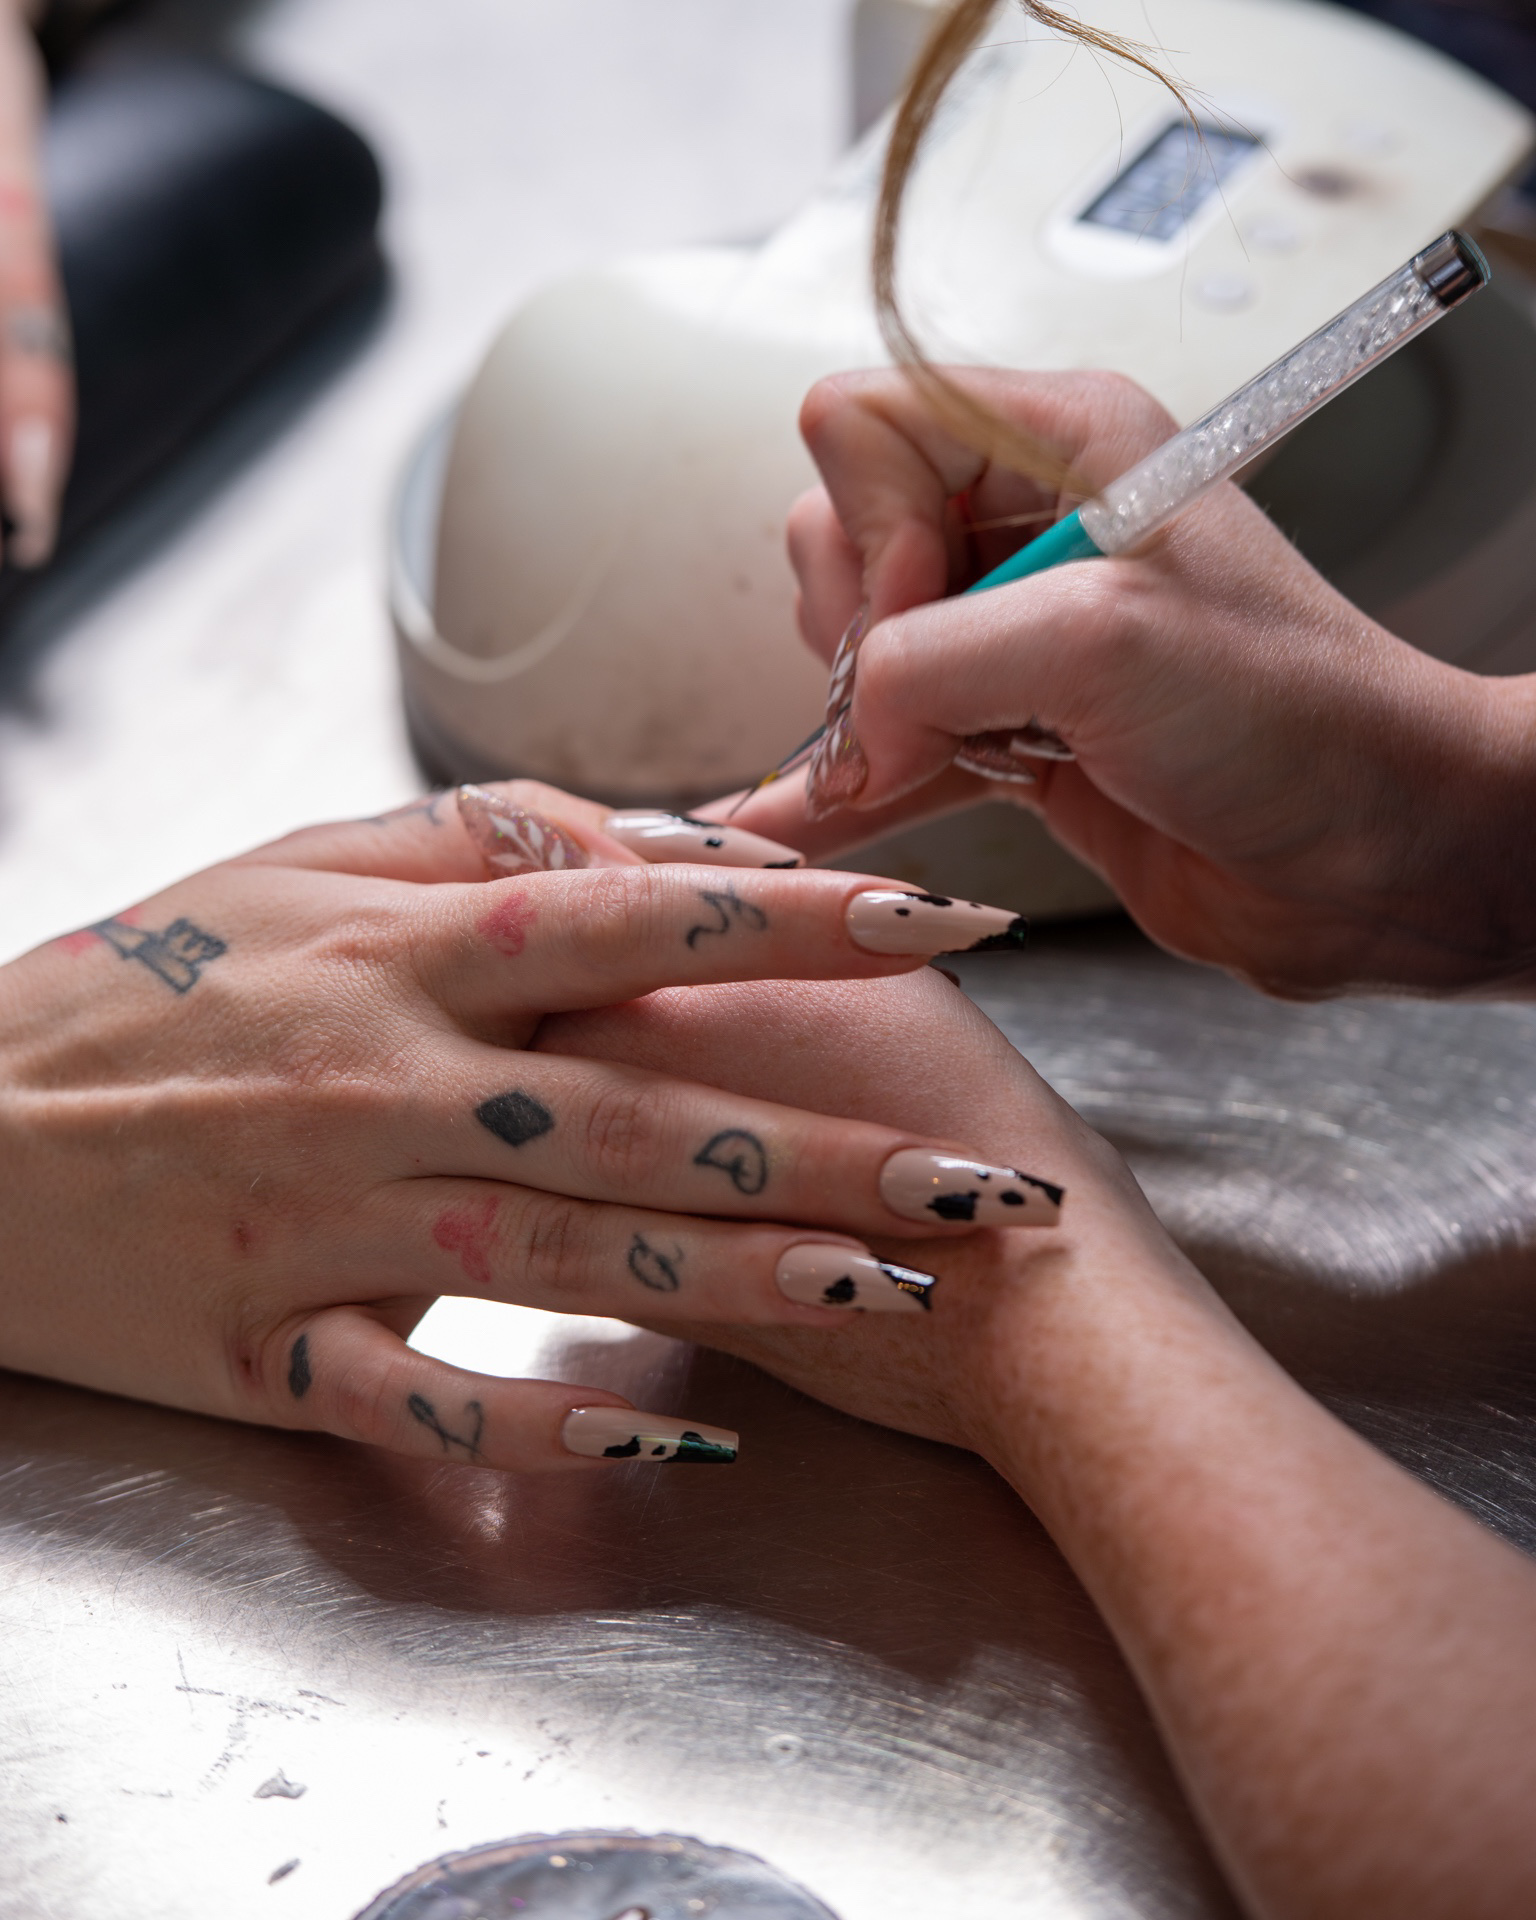 Thalia shows off chic Louis Vuitton-inspired nail art